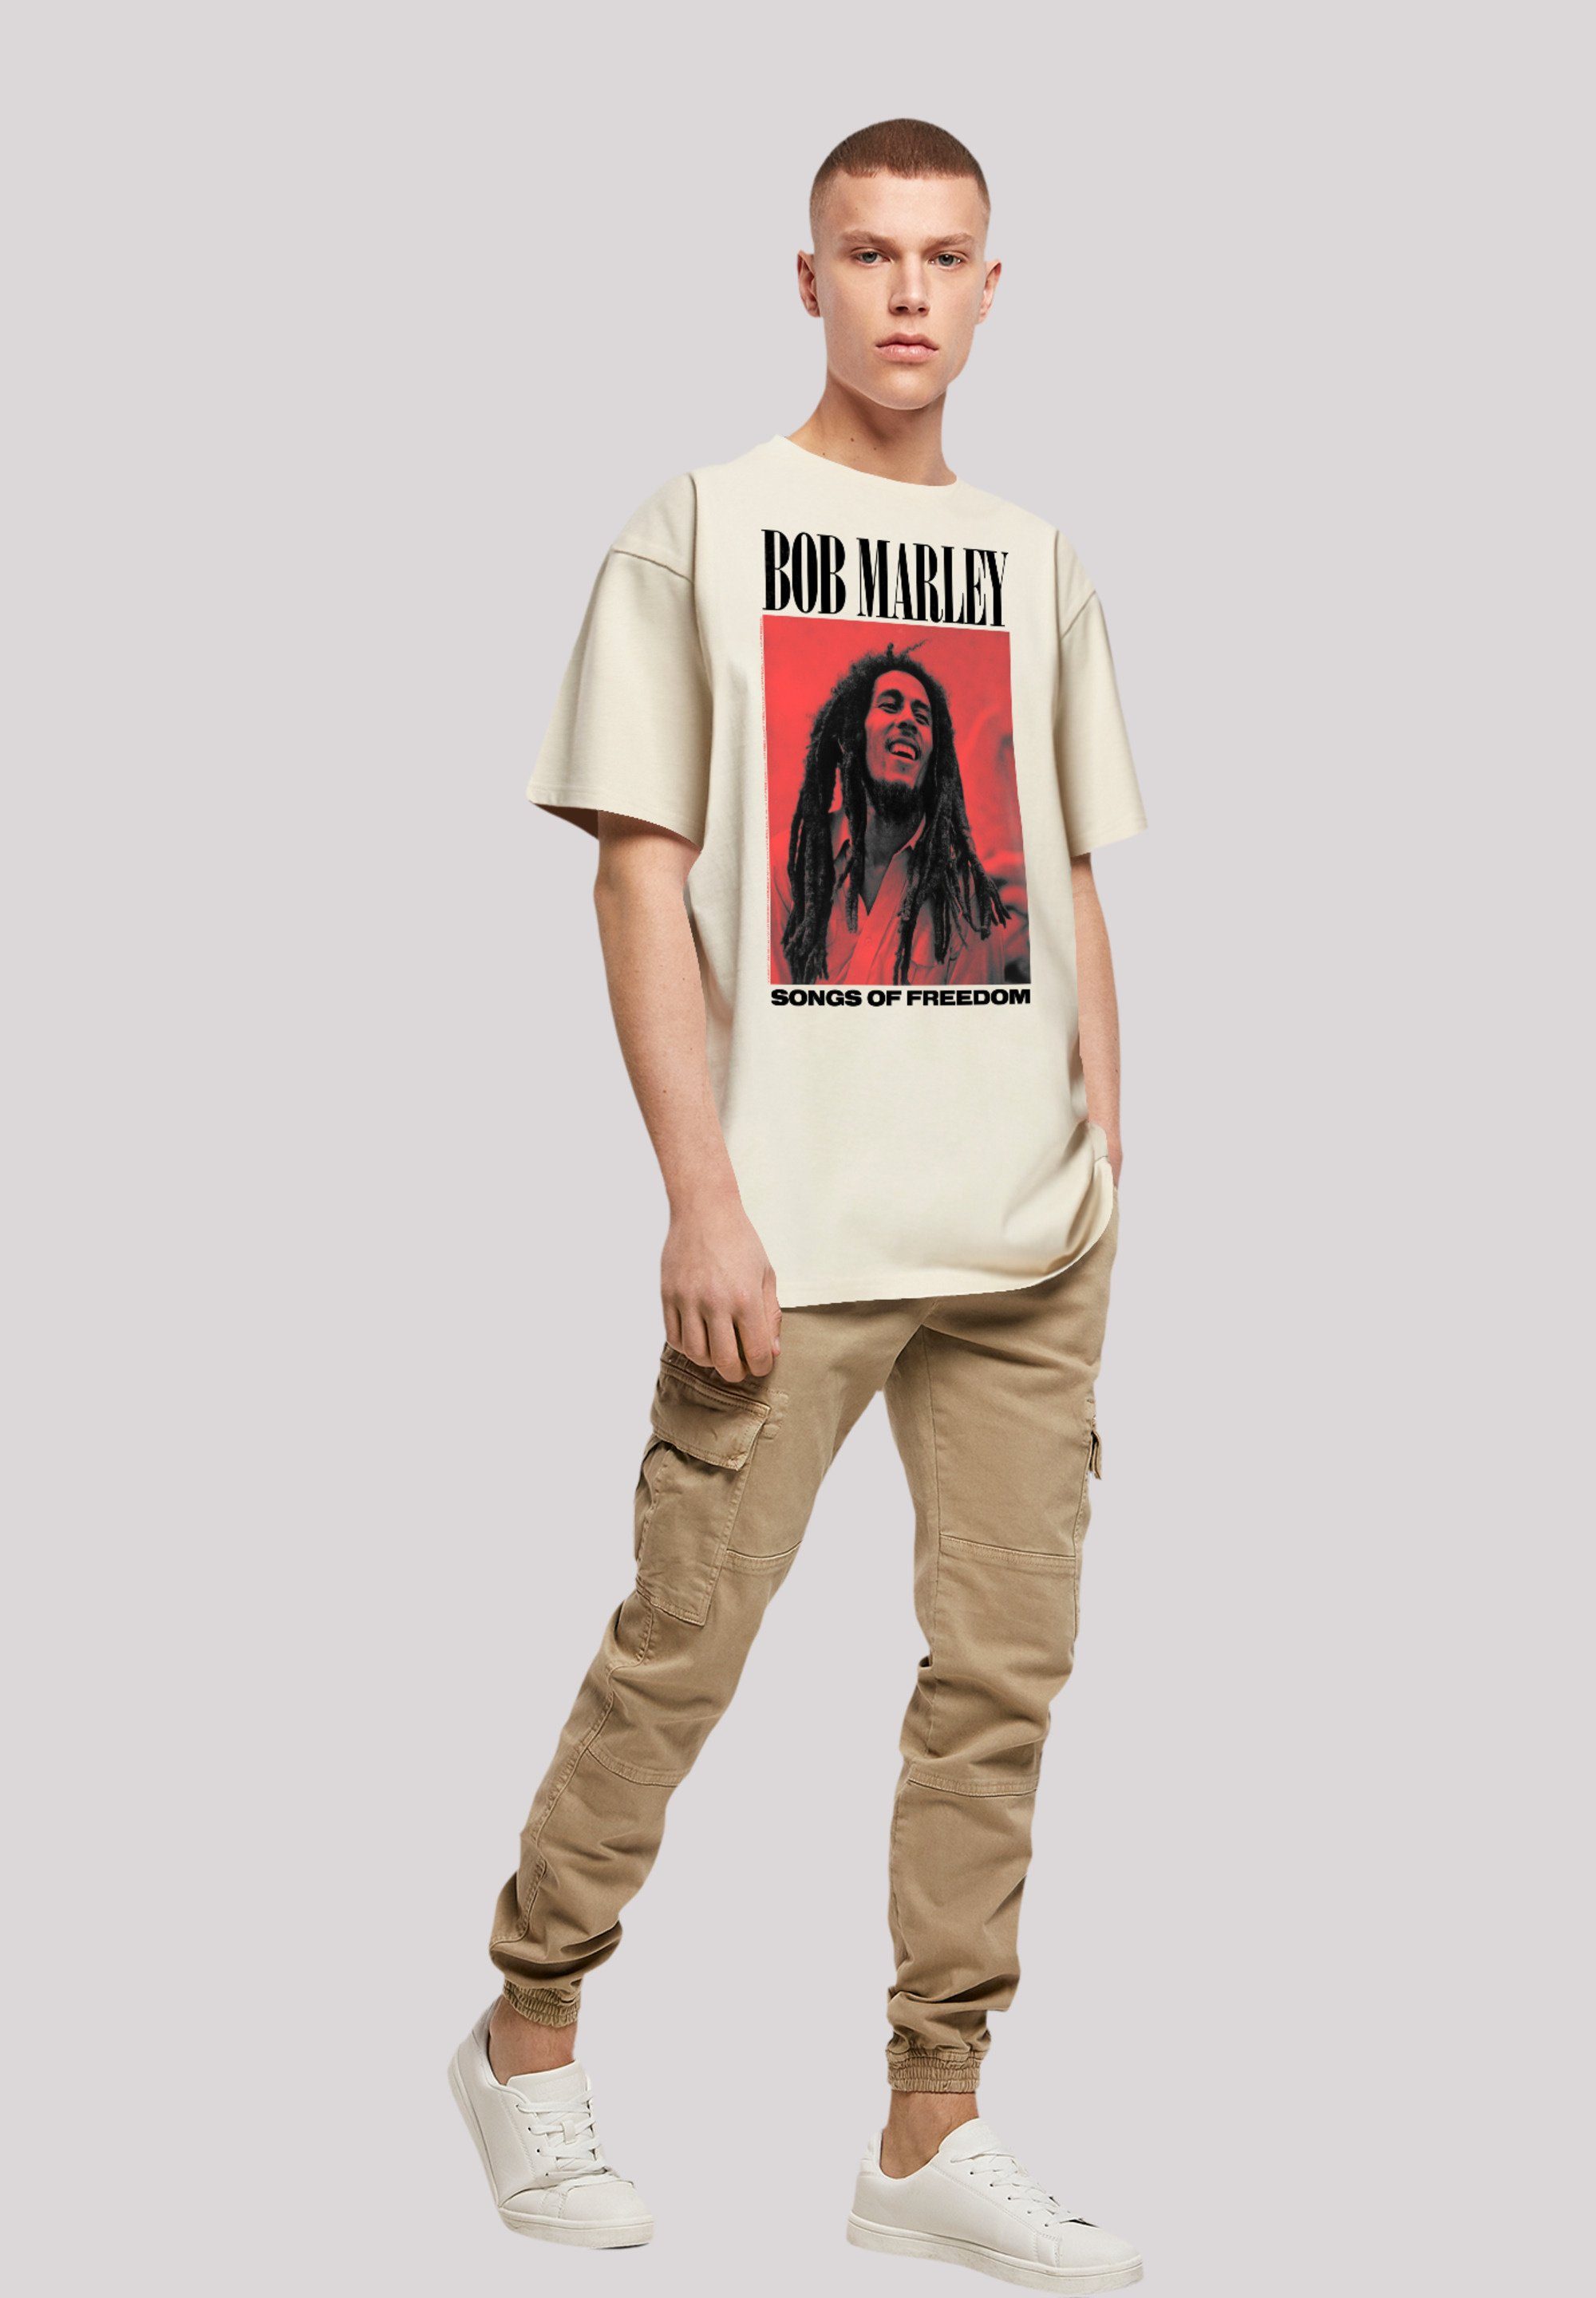 Bob By Music Qualität, Rock Of F4NT4STIC Off Freedom Musik, sand Songs Premium T-Shirt Reggae Marley